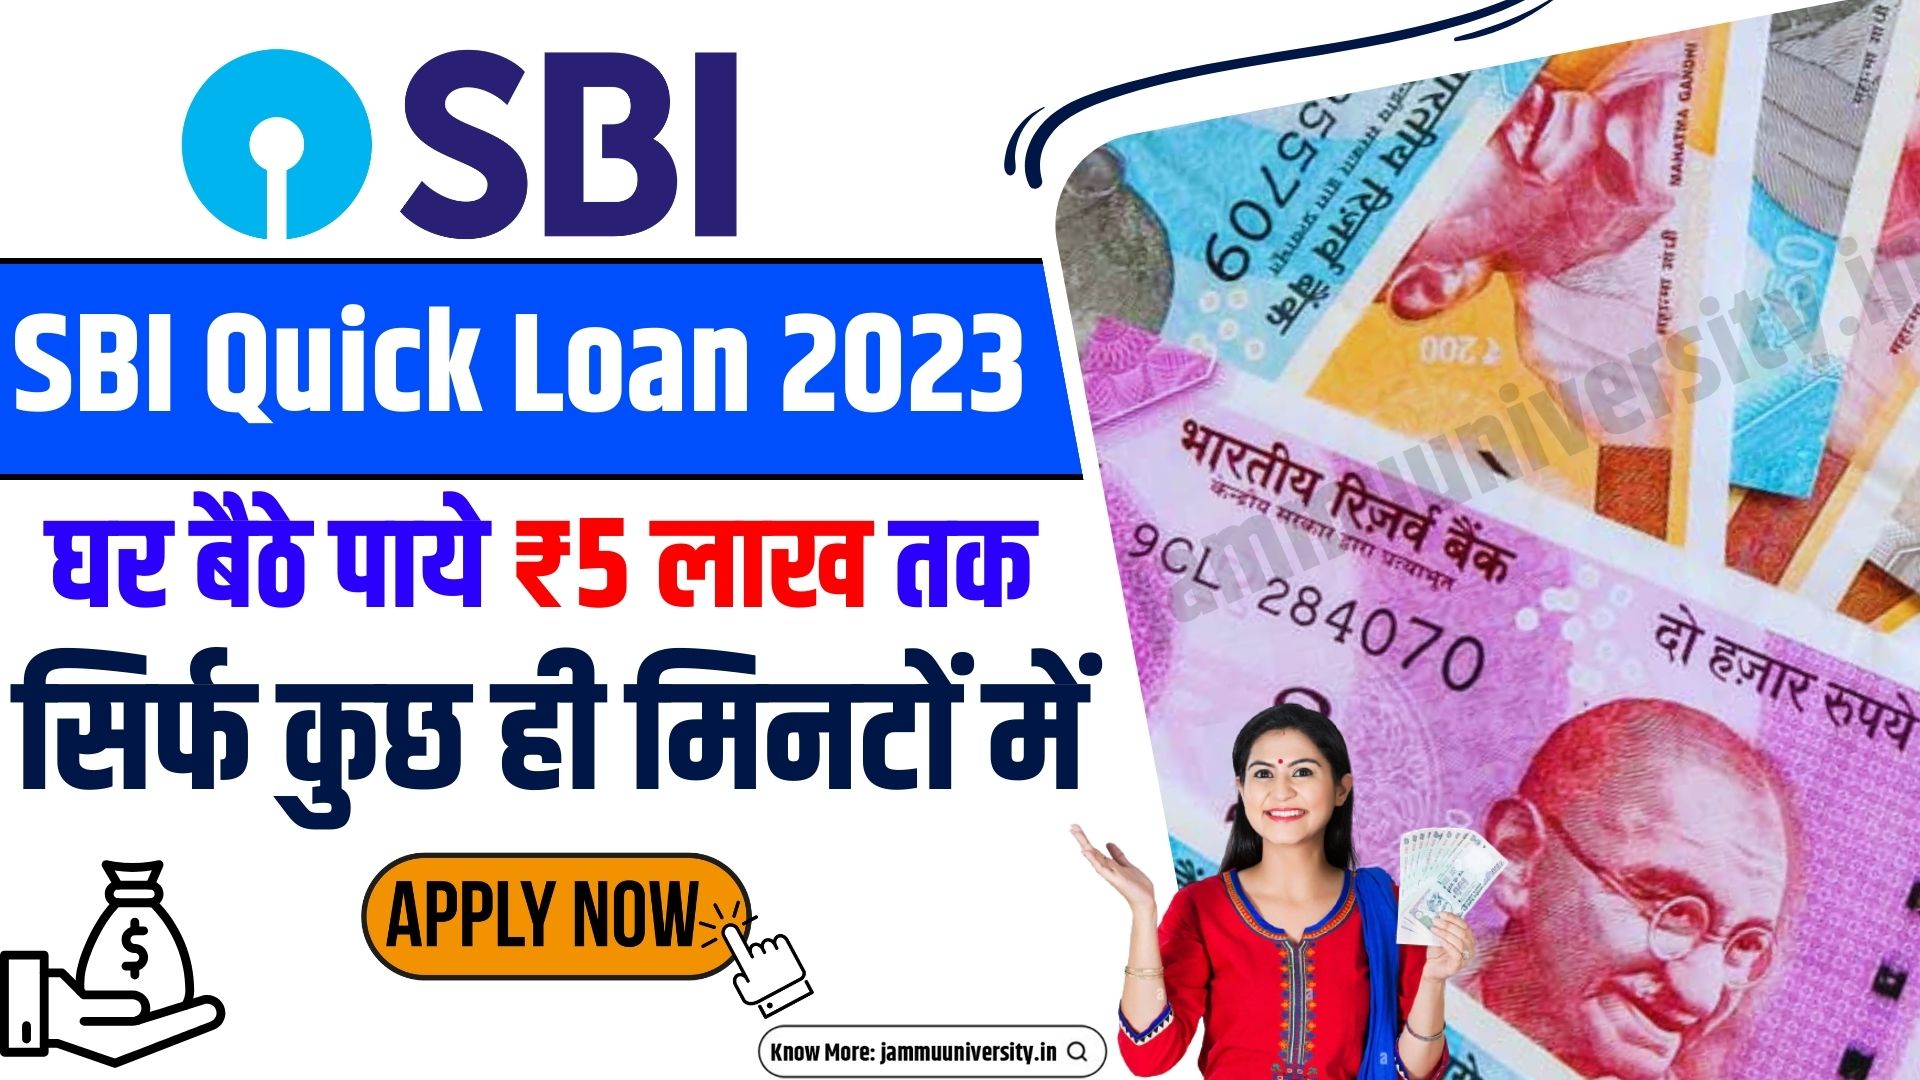 SBI Quick Personal Loan Apply Online